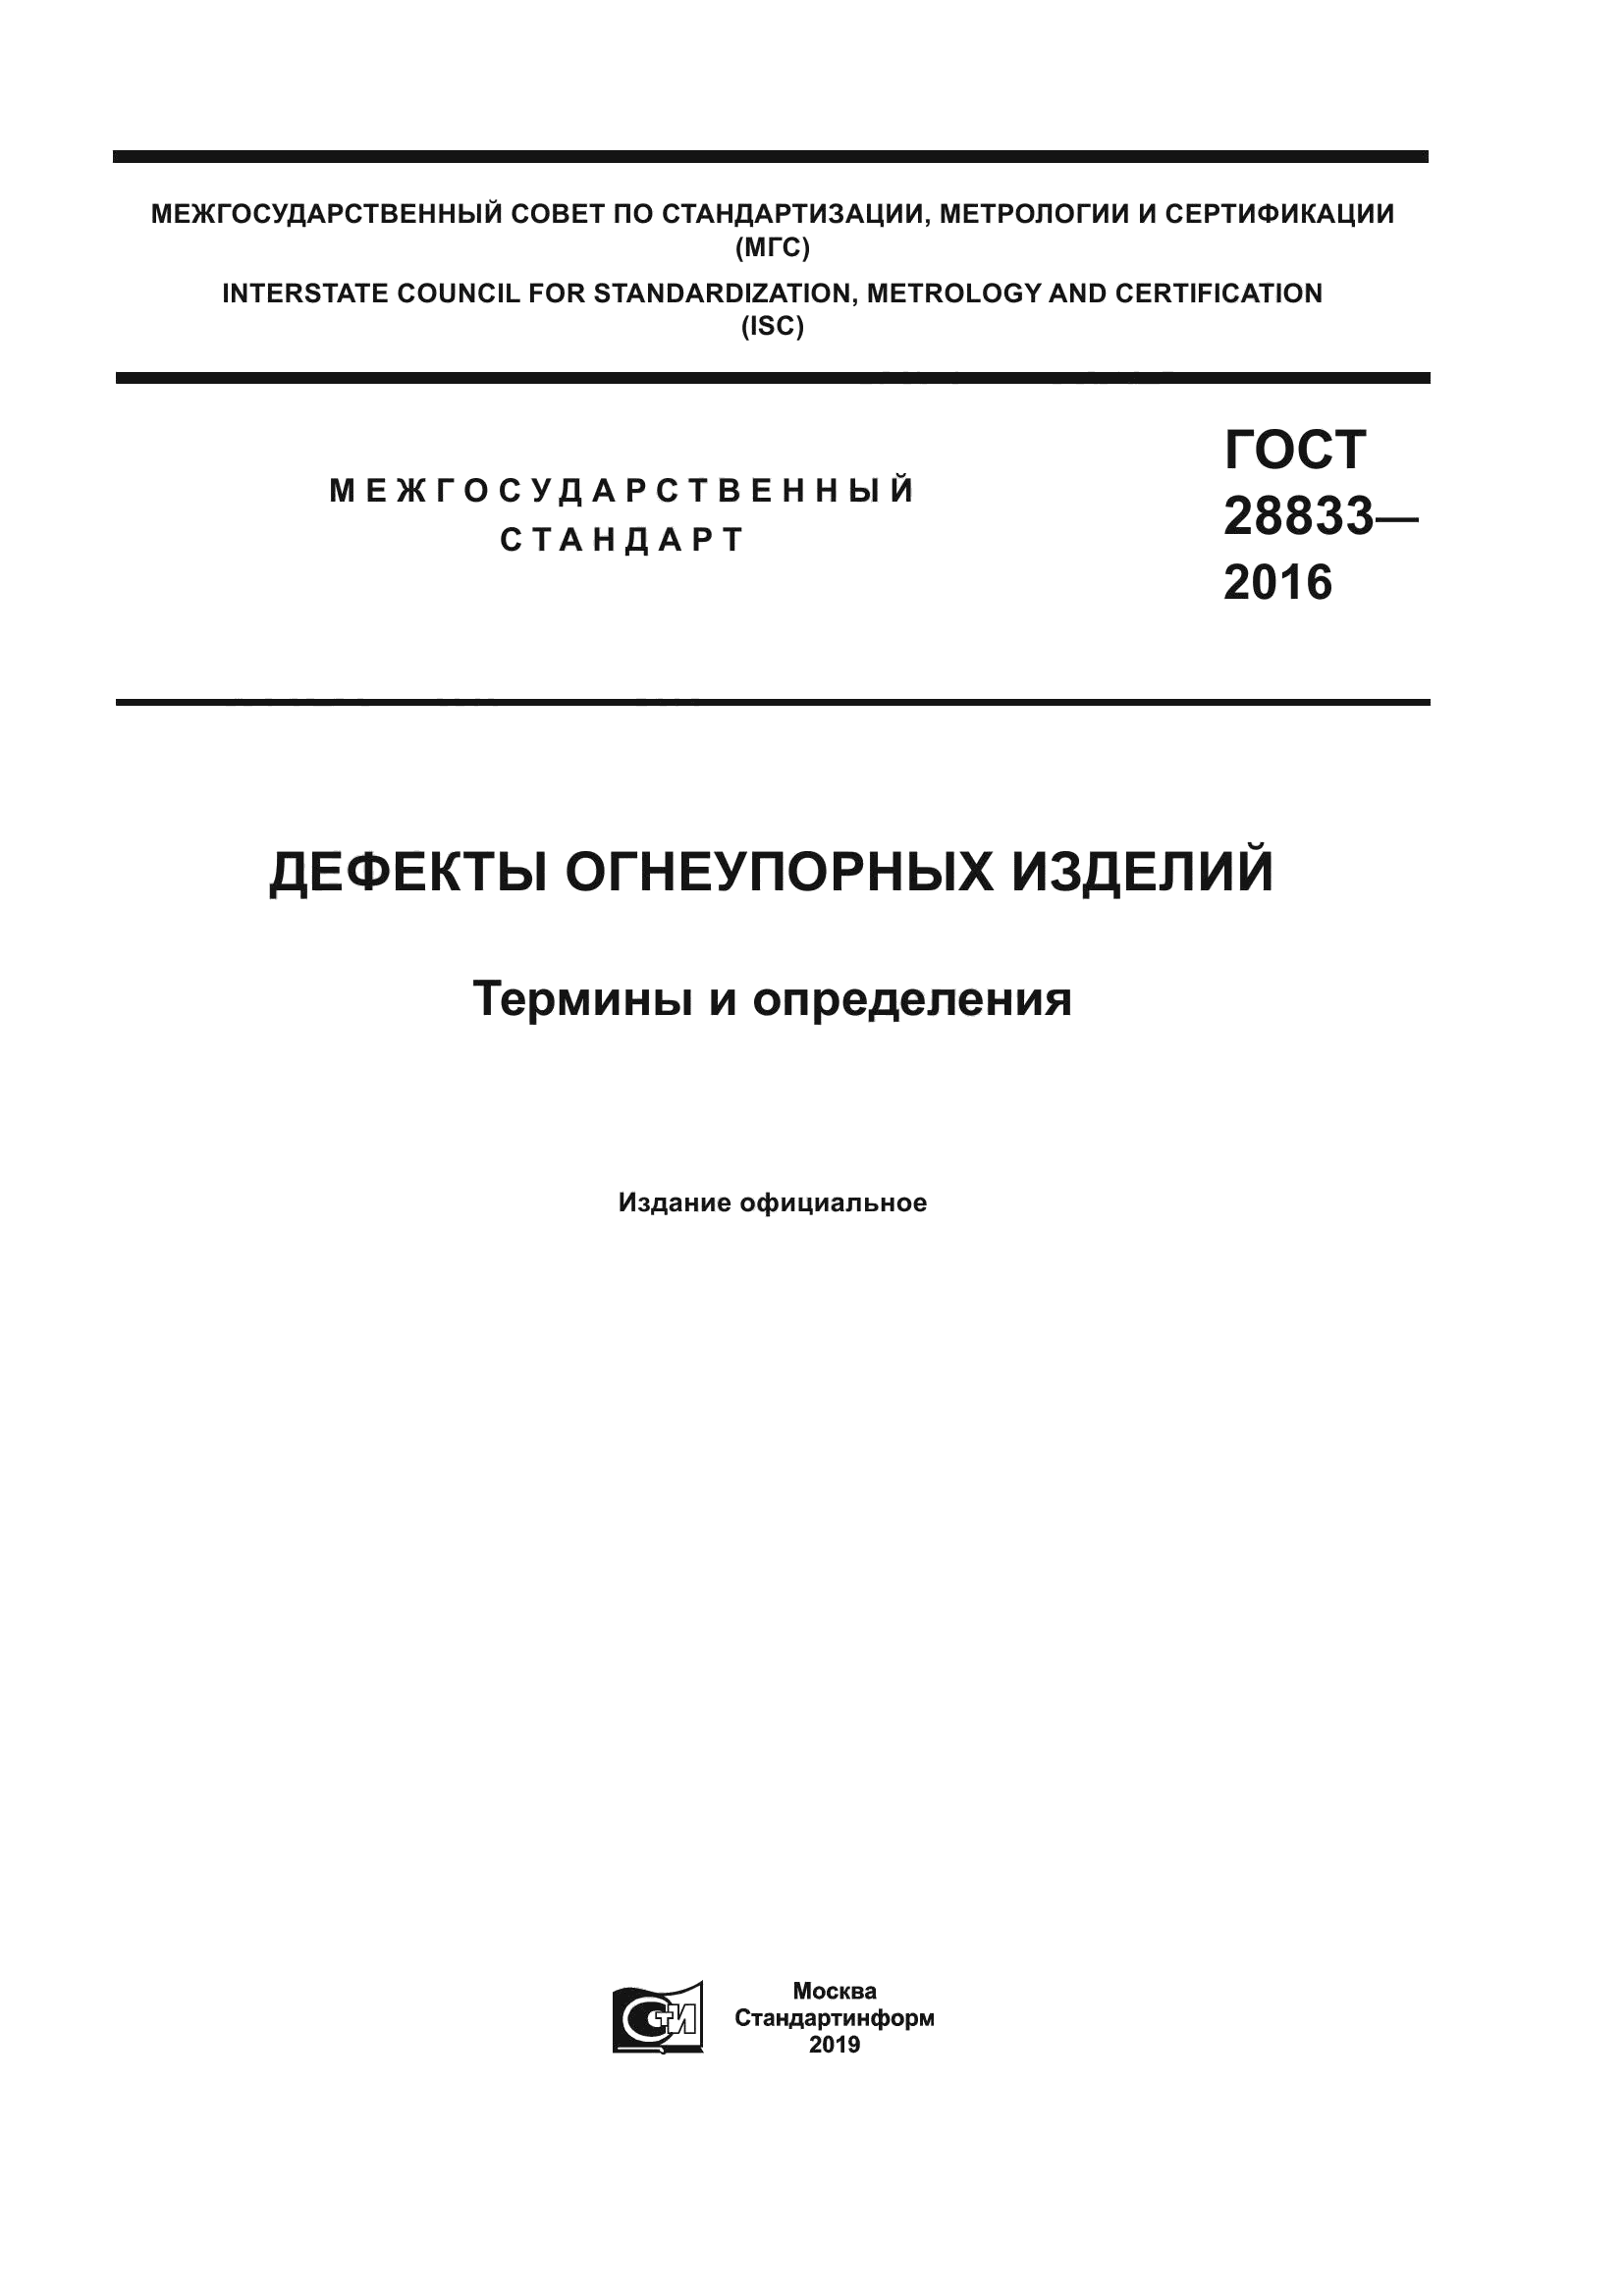 ГОСТ 28833-2016